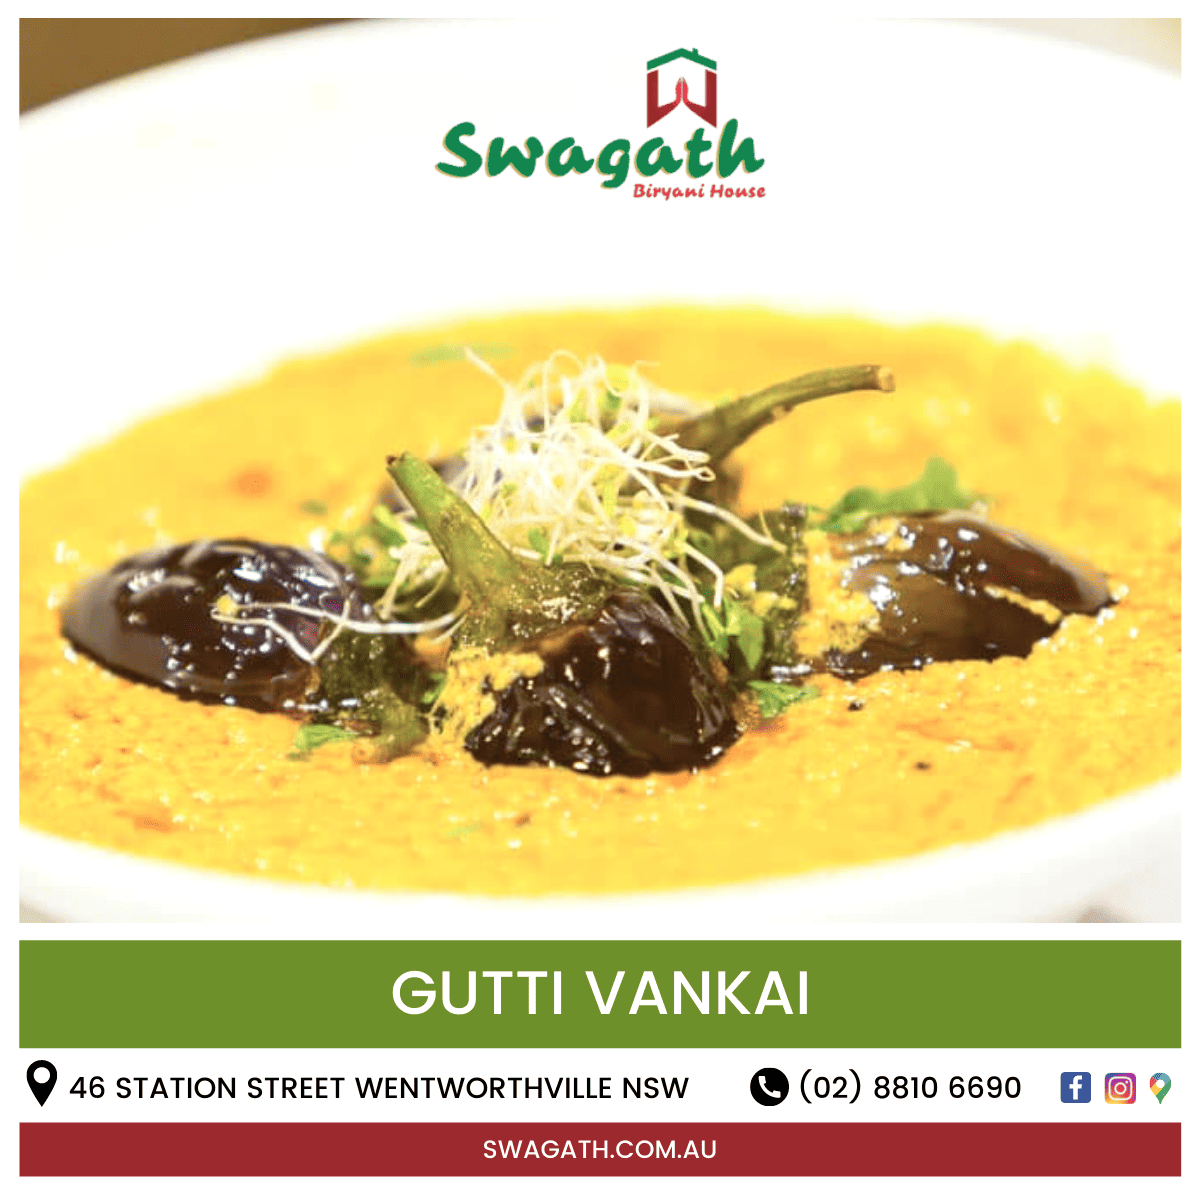 Gutti Vankai - Stuffed eggplant curry, a flavorful South Indian dish.